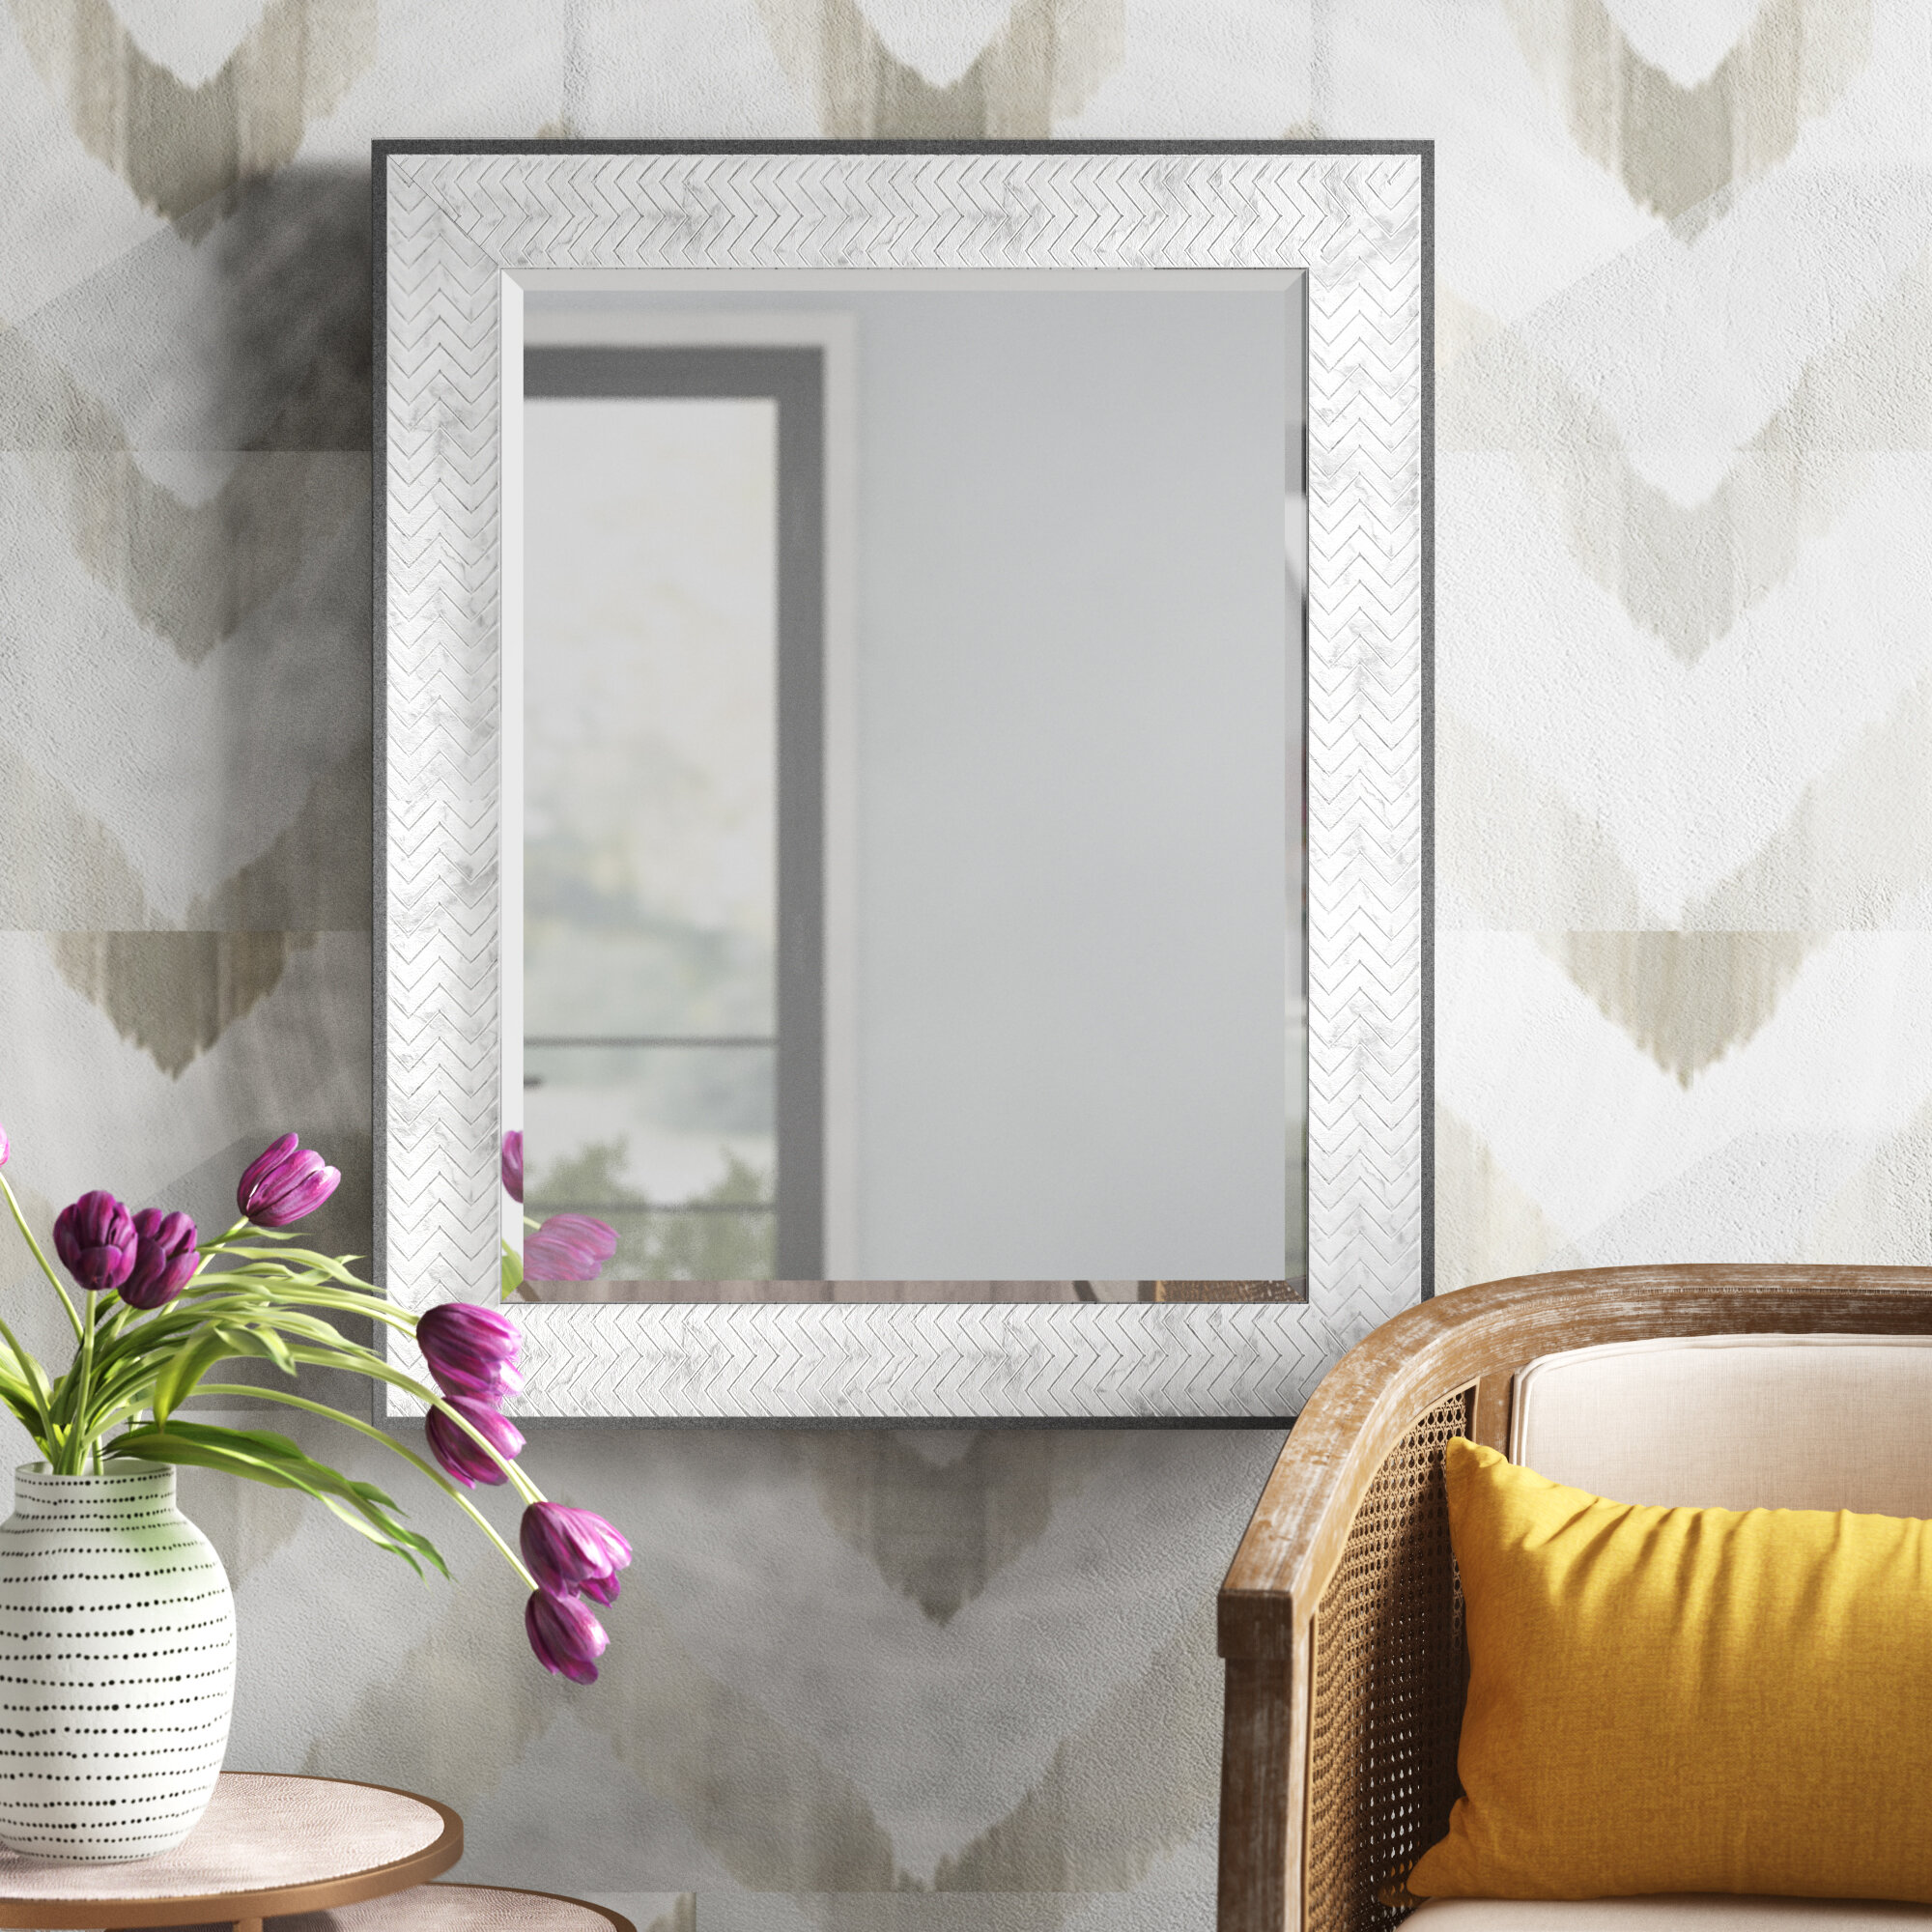 Sharon Modern Contemporary Beveled Chevron Bathroom Vanity Mirror Reviews Joss Main